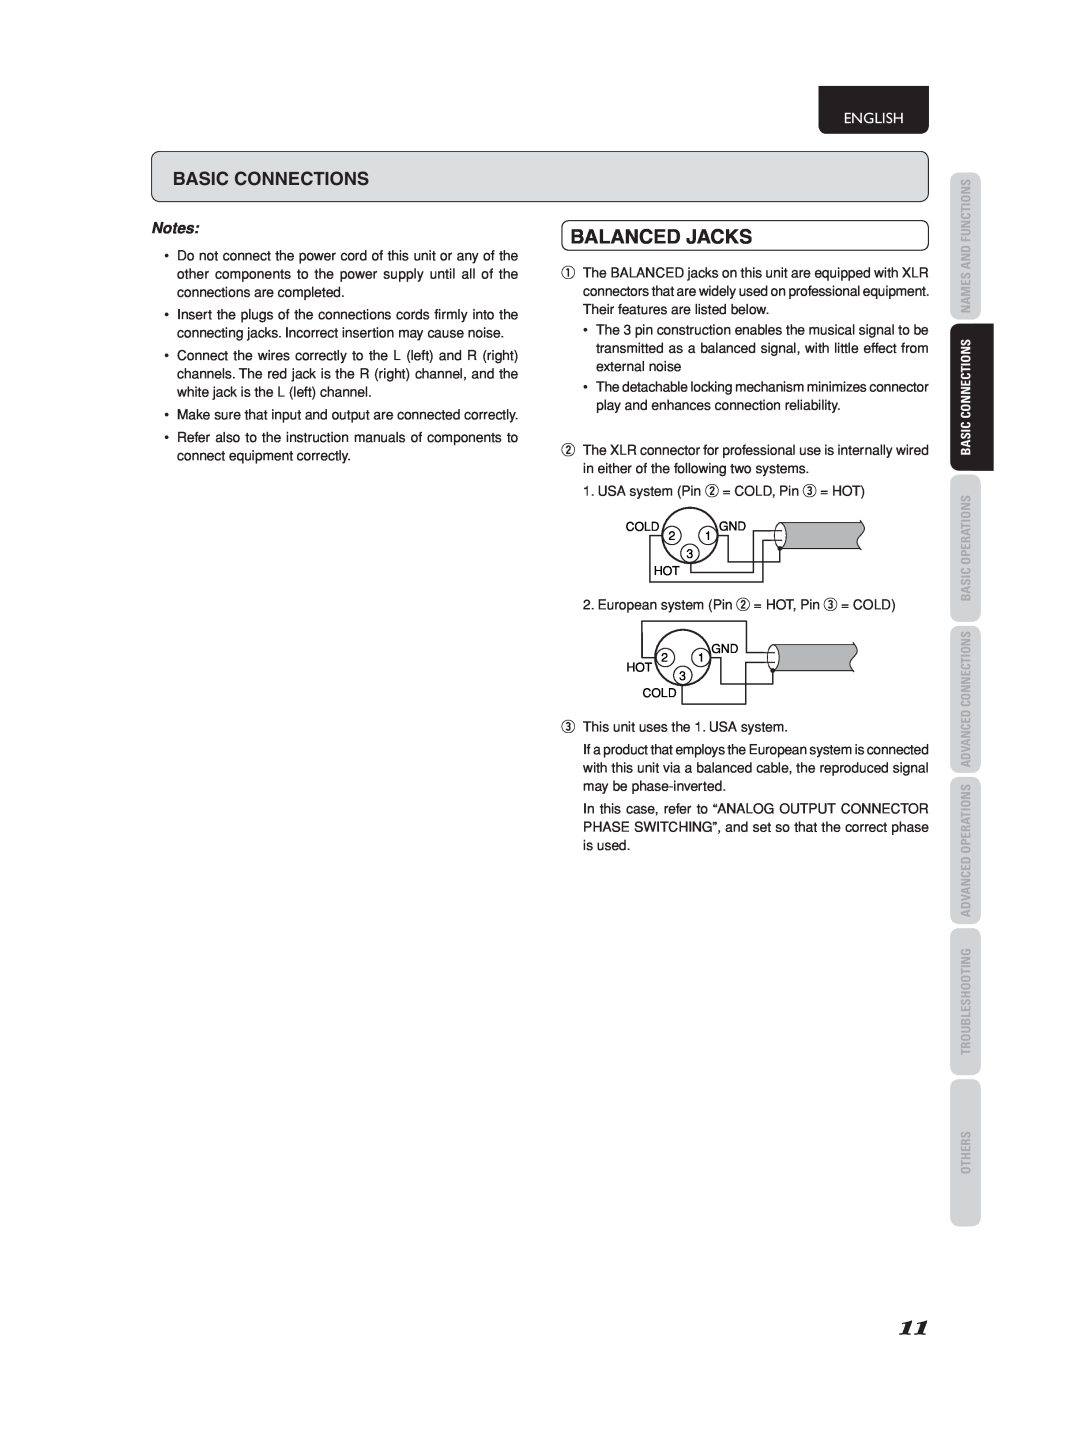 Marantz PM-11S2 manual Balanced Jacks, English 